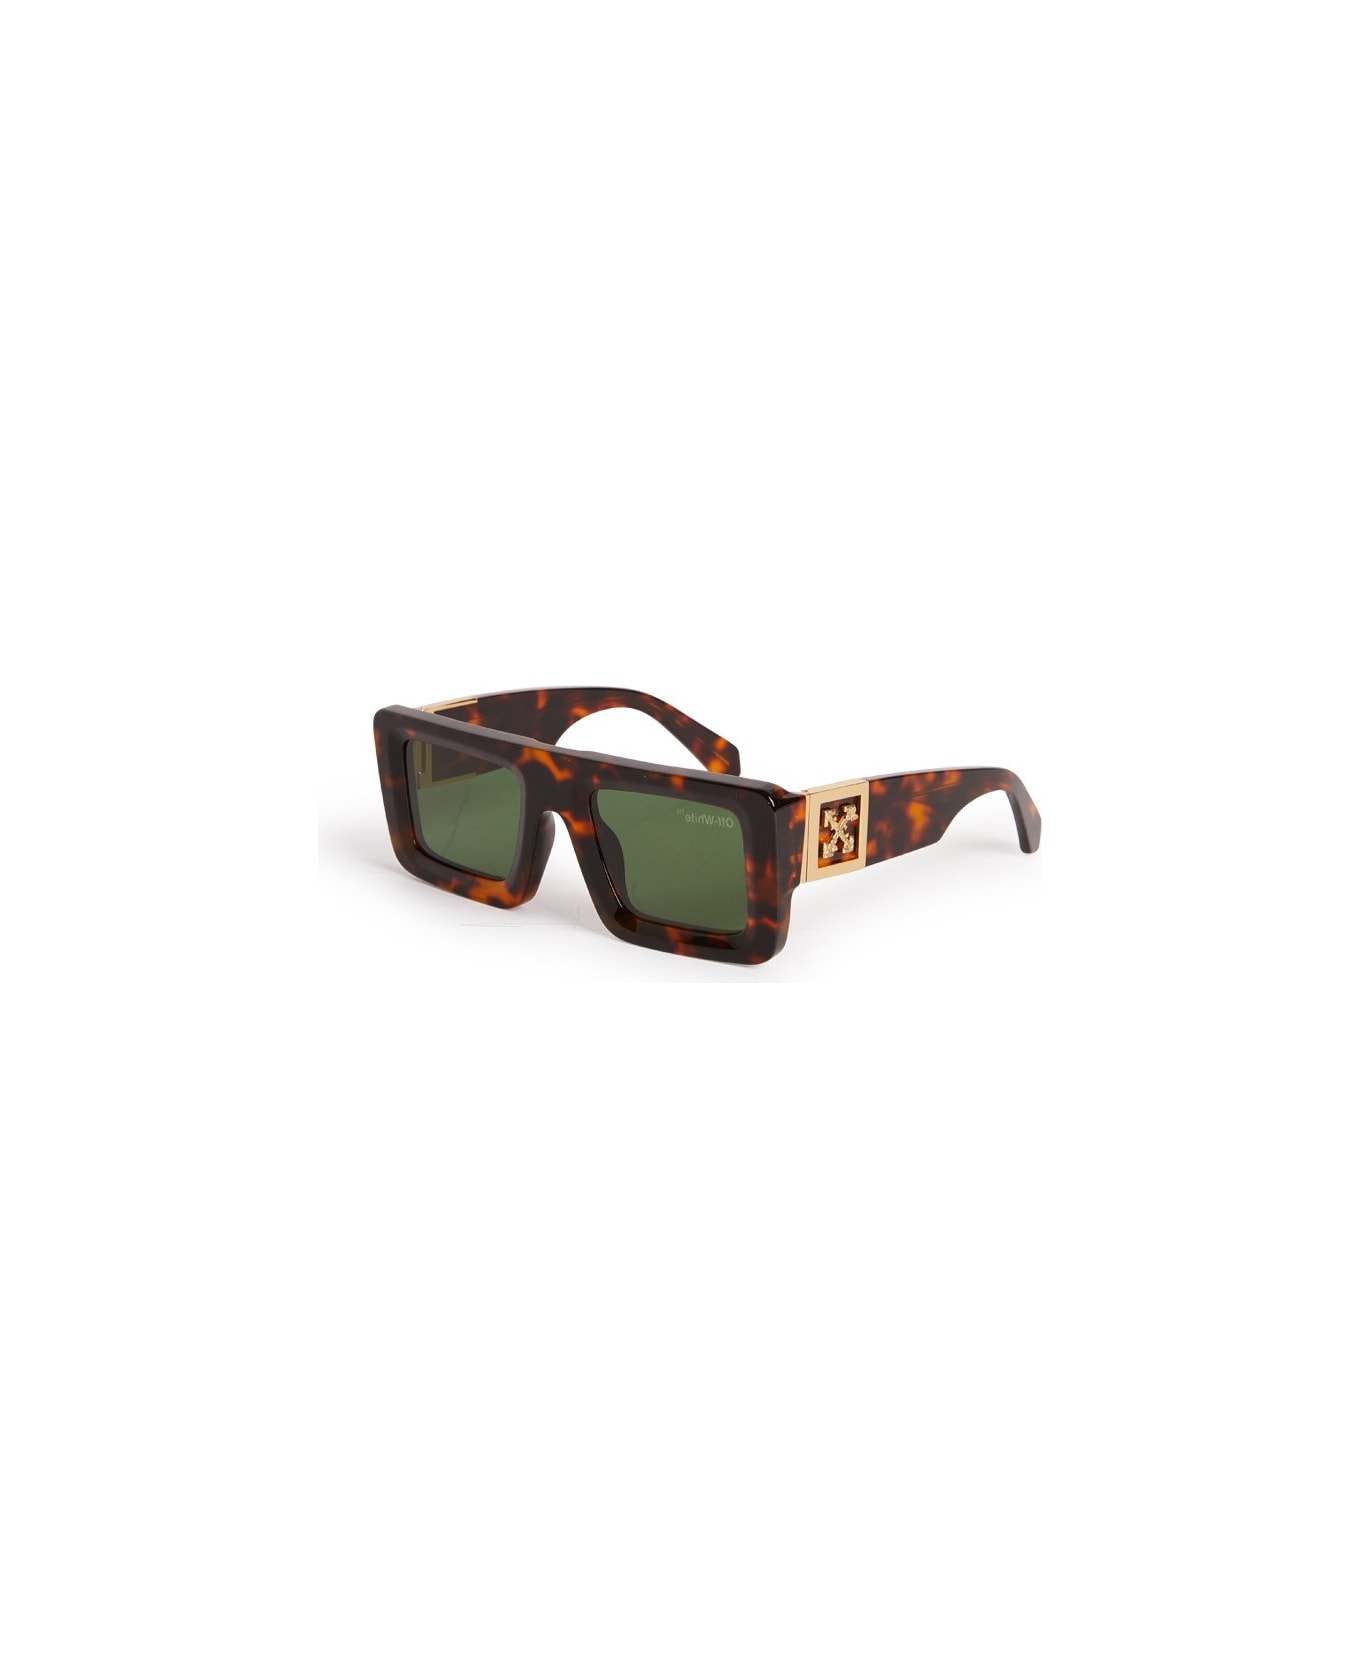 Off-White LEONARDO SUNGLASSES Sunglasses - Havana サングラス